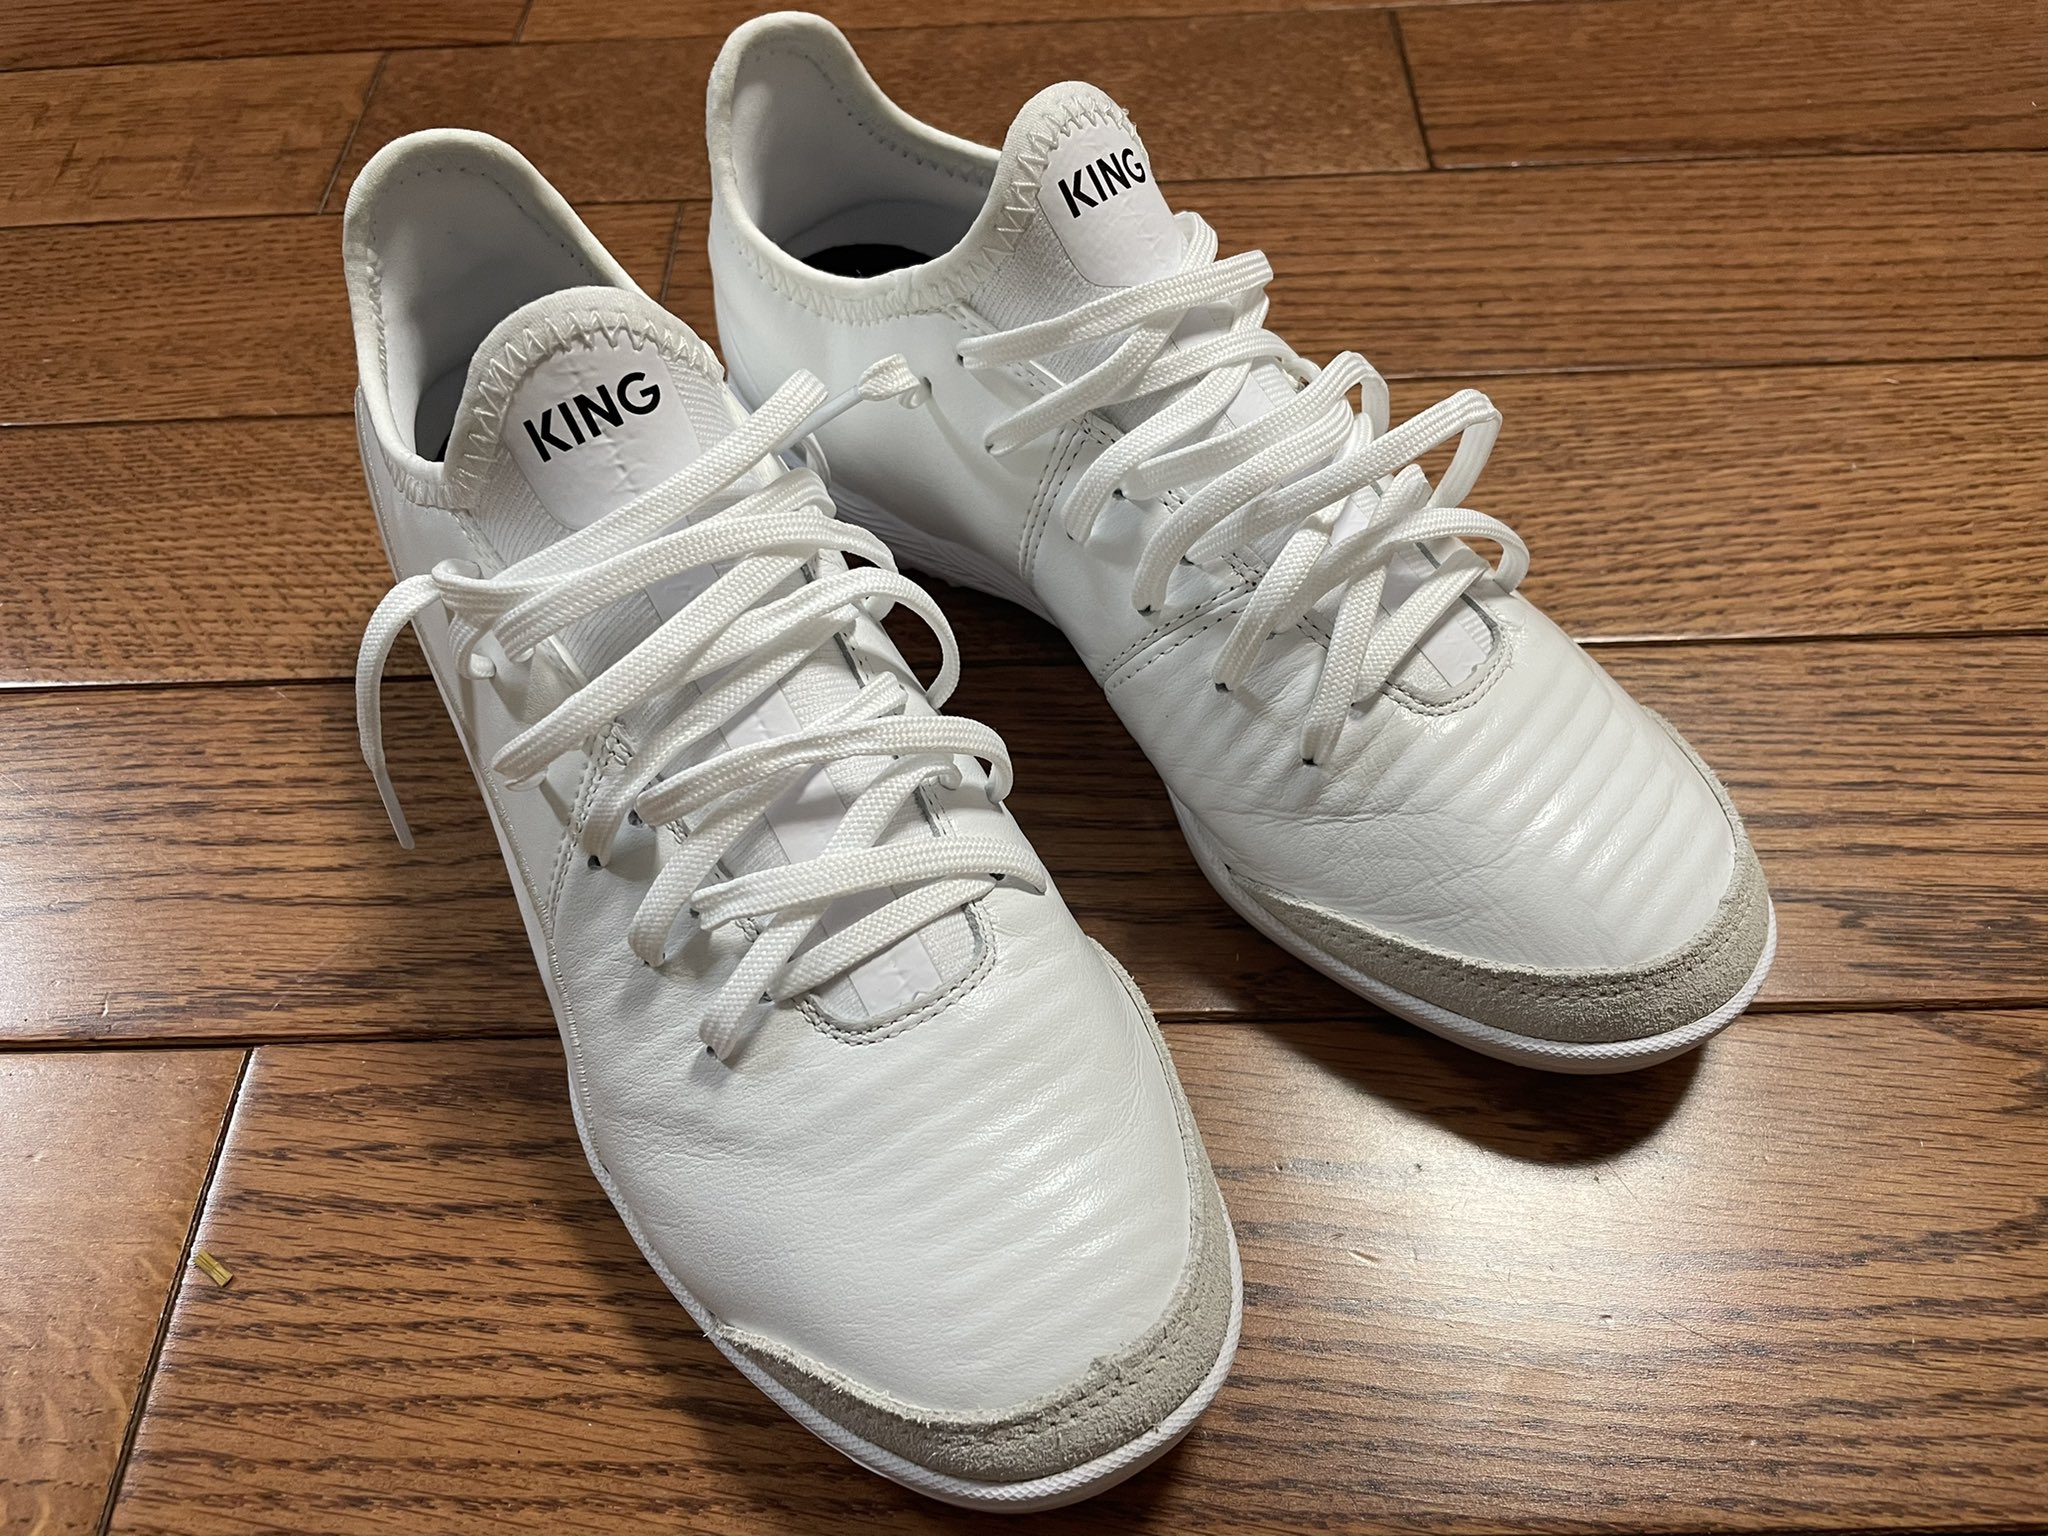 interview blessing bond Teppei SAITOH on Twitter: "PUMA KING Pro TT. The training shoe model of the  soccer spikes worn by Kazuyoshi Miura. Amazing fitting.  https://t.co/4m4ZjBK4vM" / Twitter